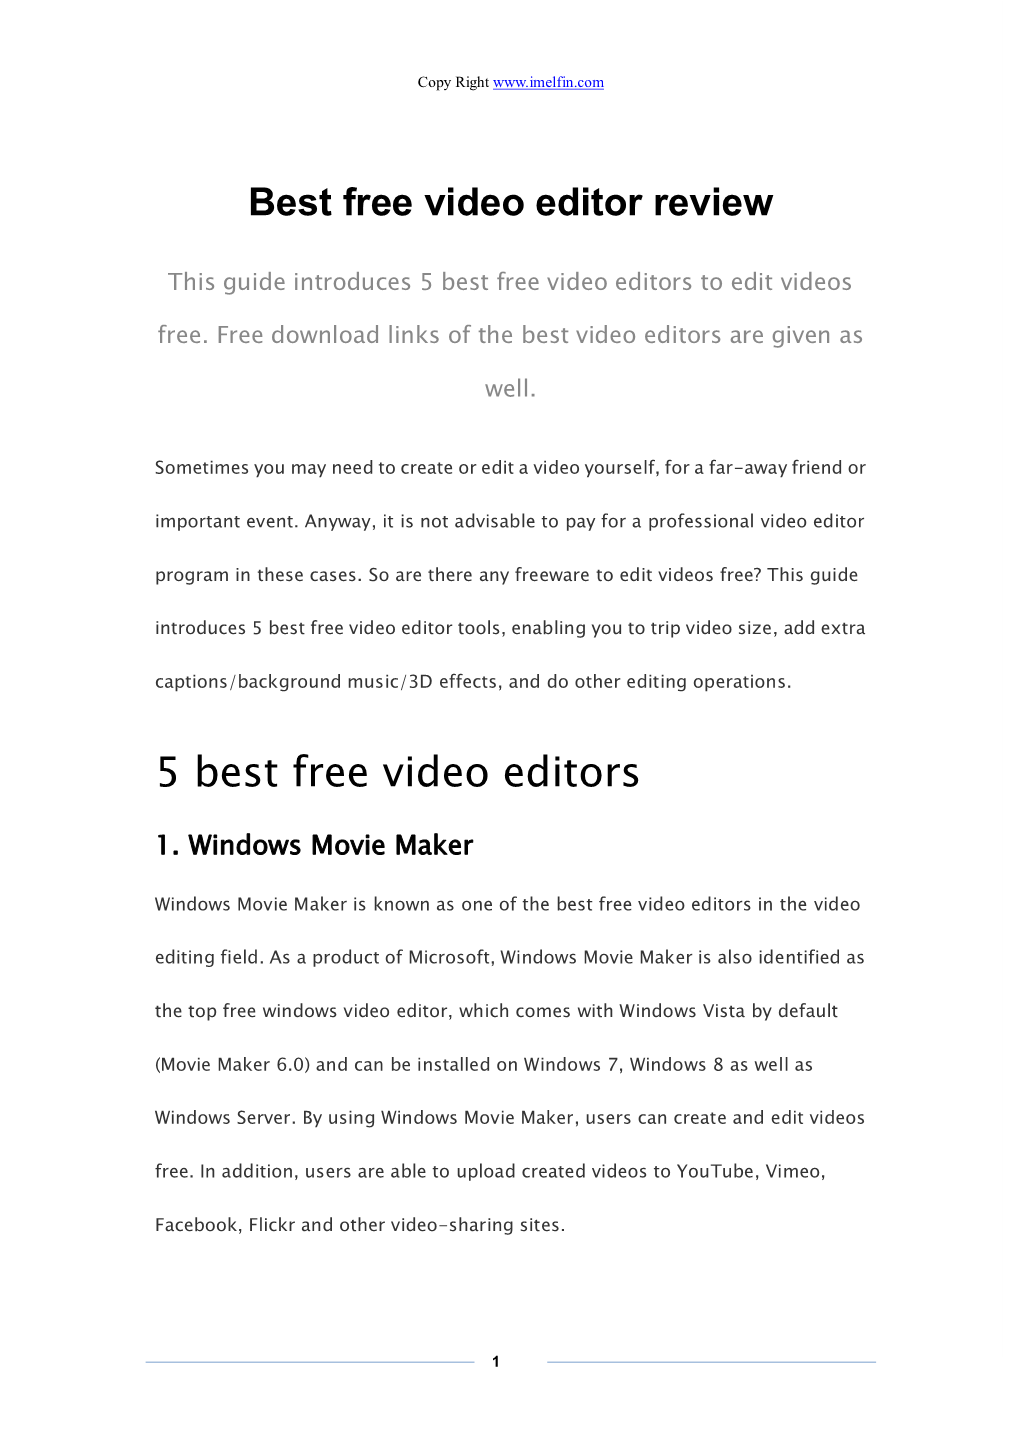 5 Best Free Video Editors to Edit Videos Free